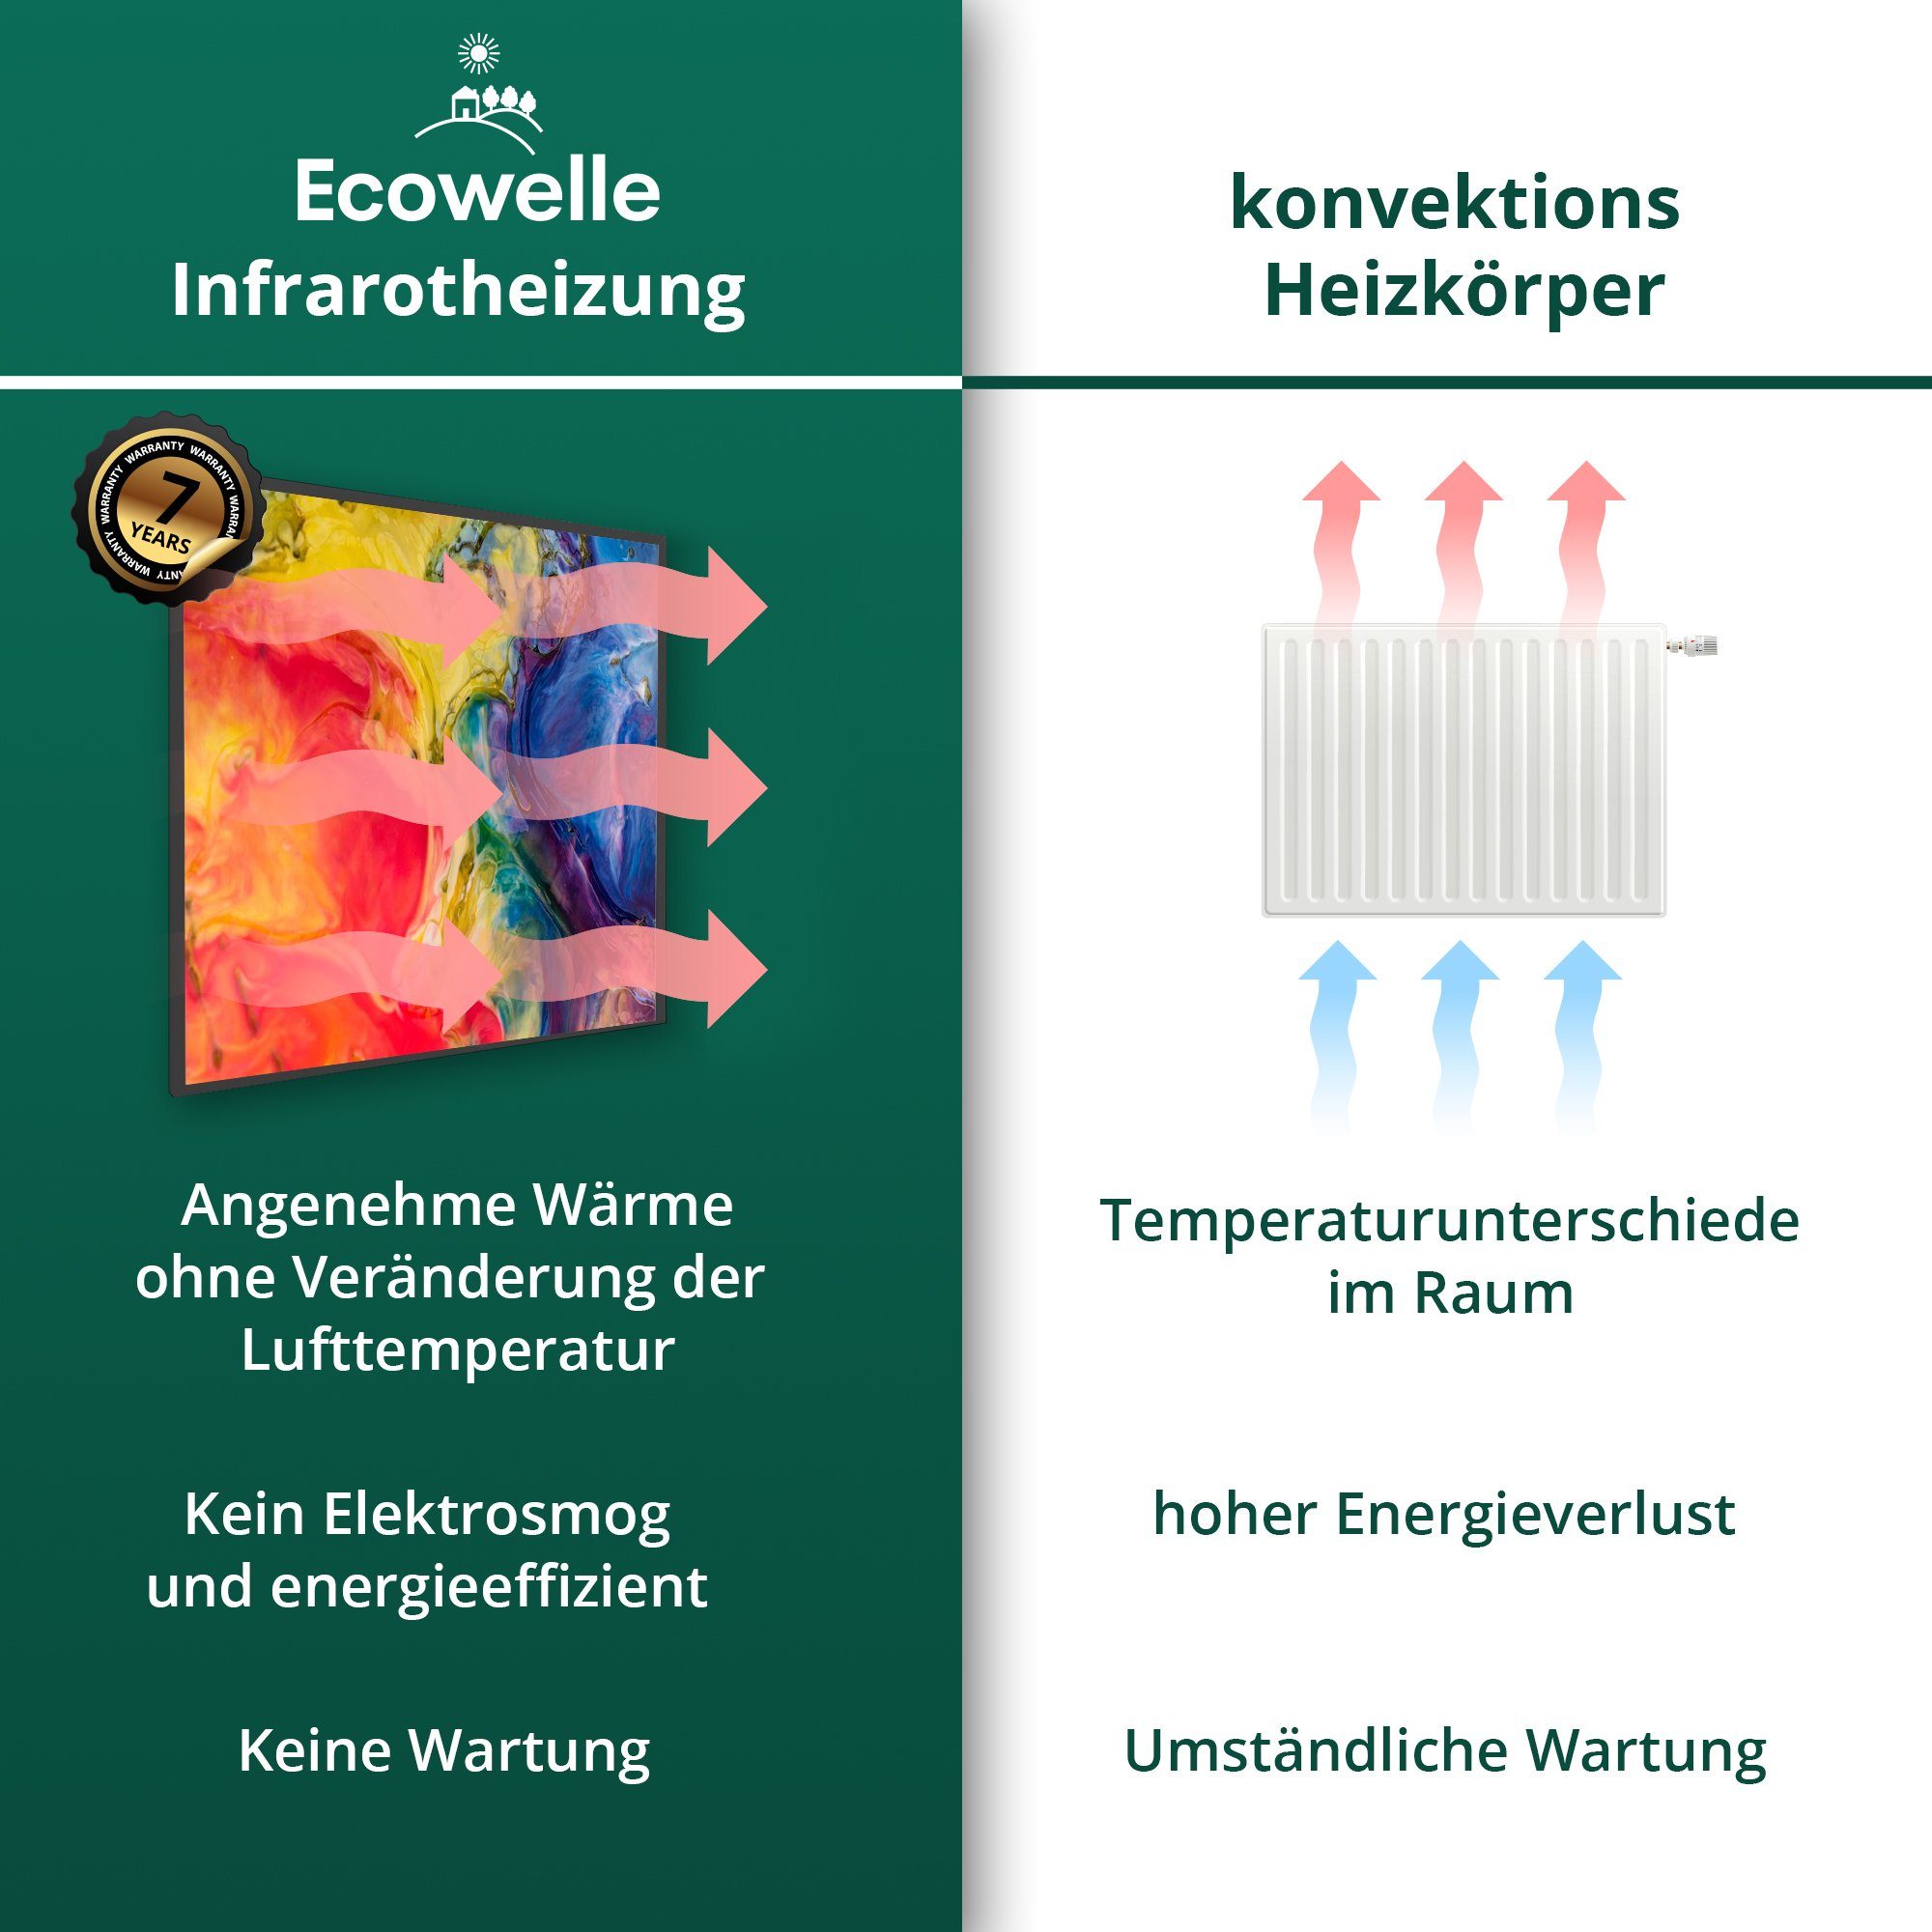 App + Thermostat, 350-1200 in Wifi Watt Elektroheizung Infrarotheizung Made Ecowelle Geprüft, Germany, Rahmen Aluminium TÜV